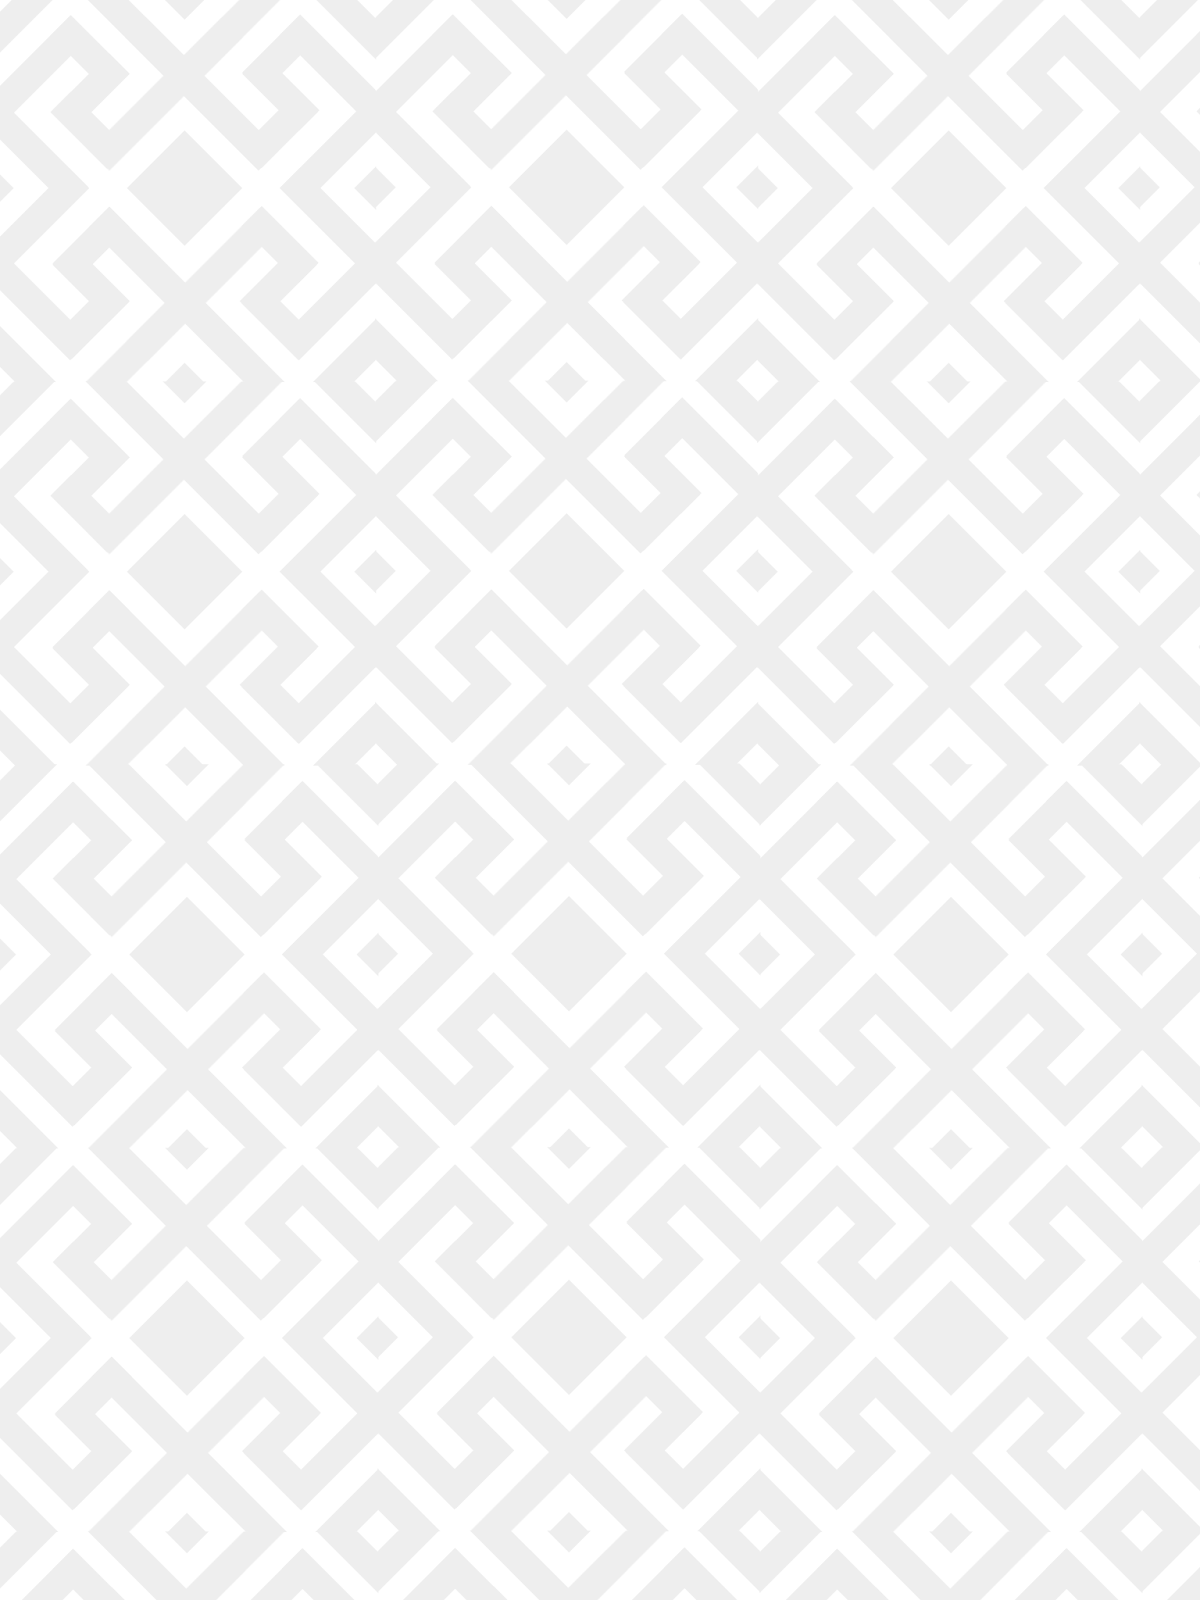 White Geometric Wallpapers 4k Hd White Geometric Backgrounds On Wallpaperbat 